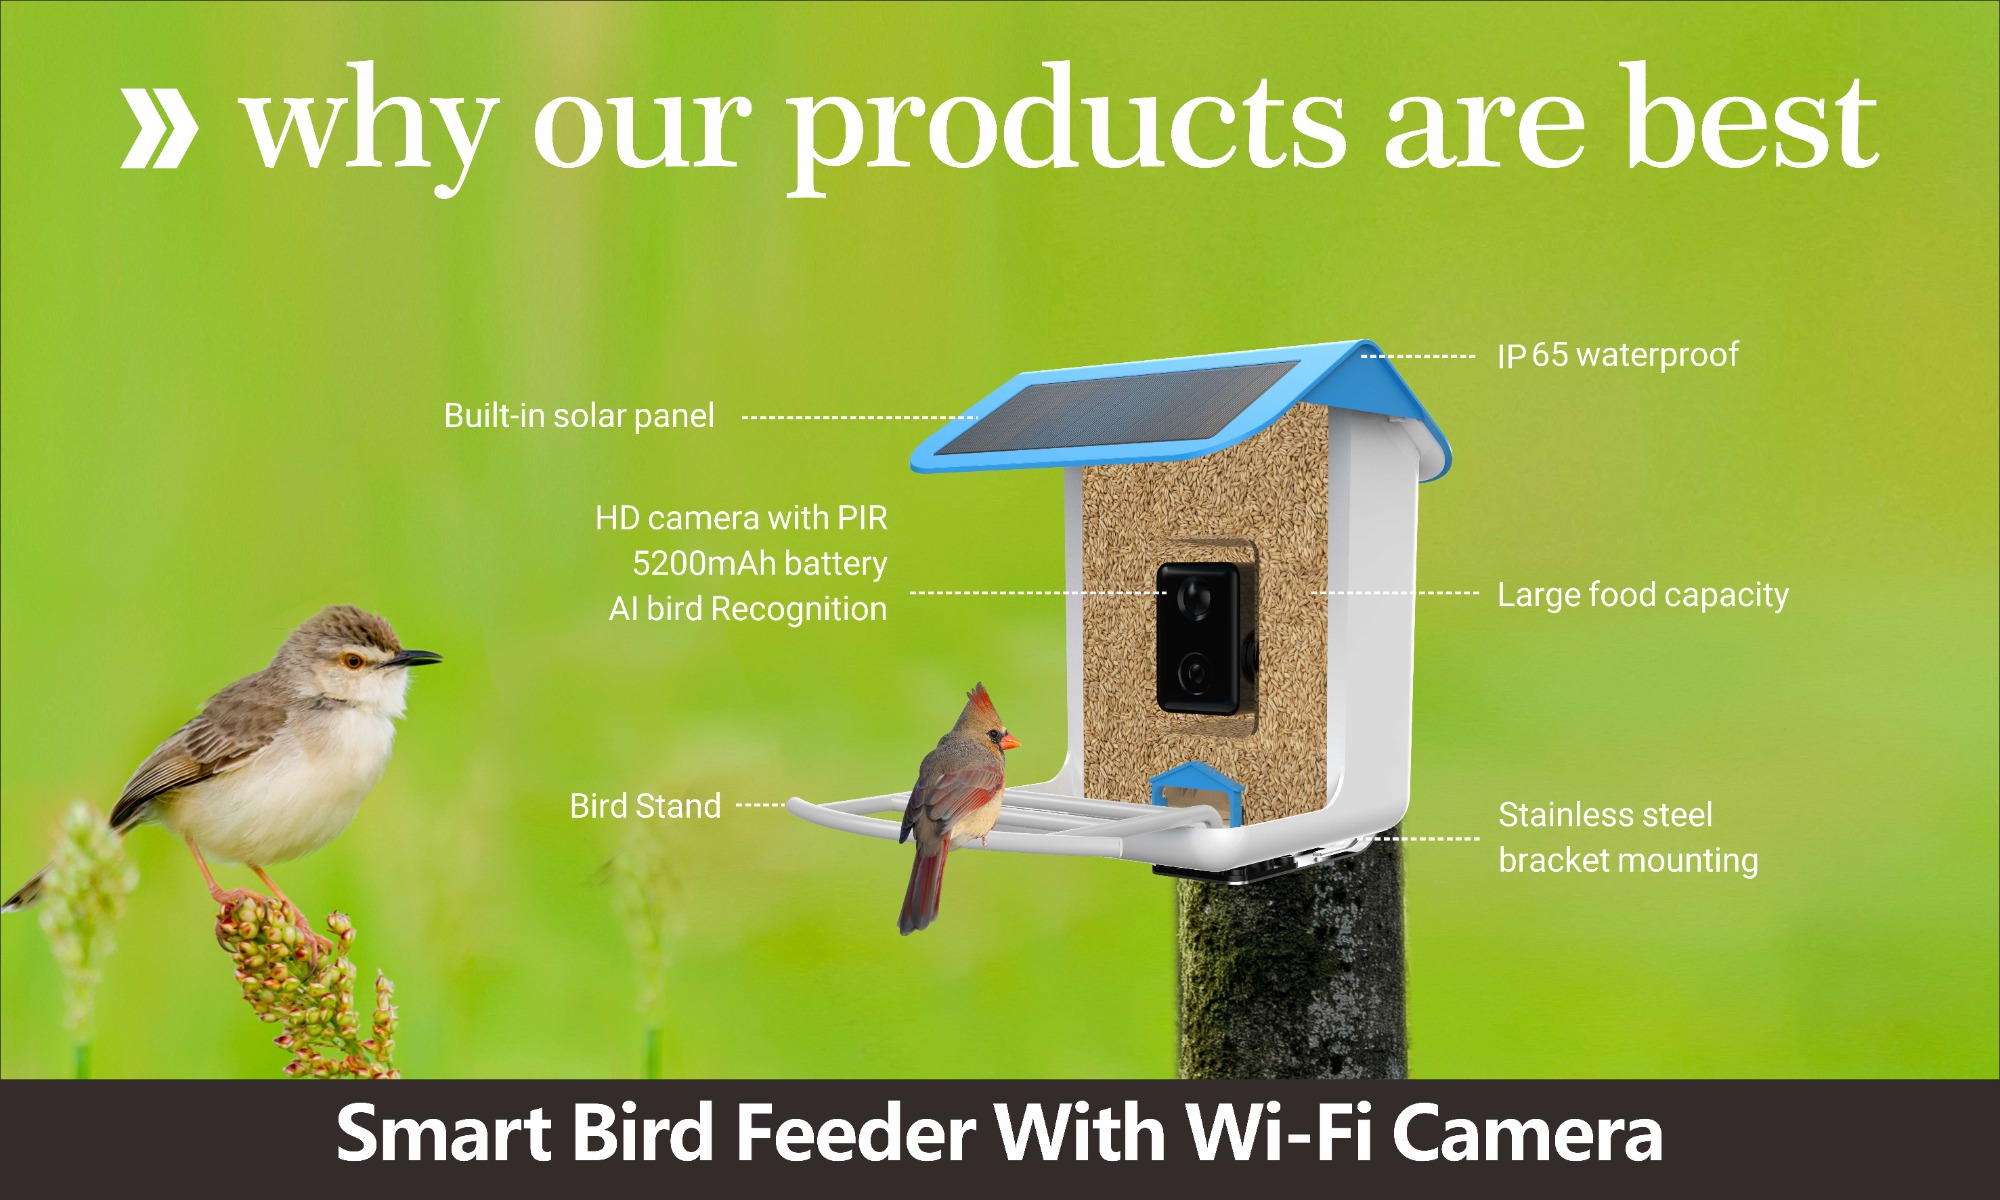 Smart Bird Feeder With Wi-Fi Camera